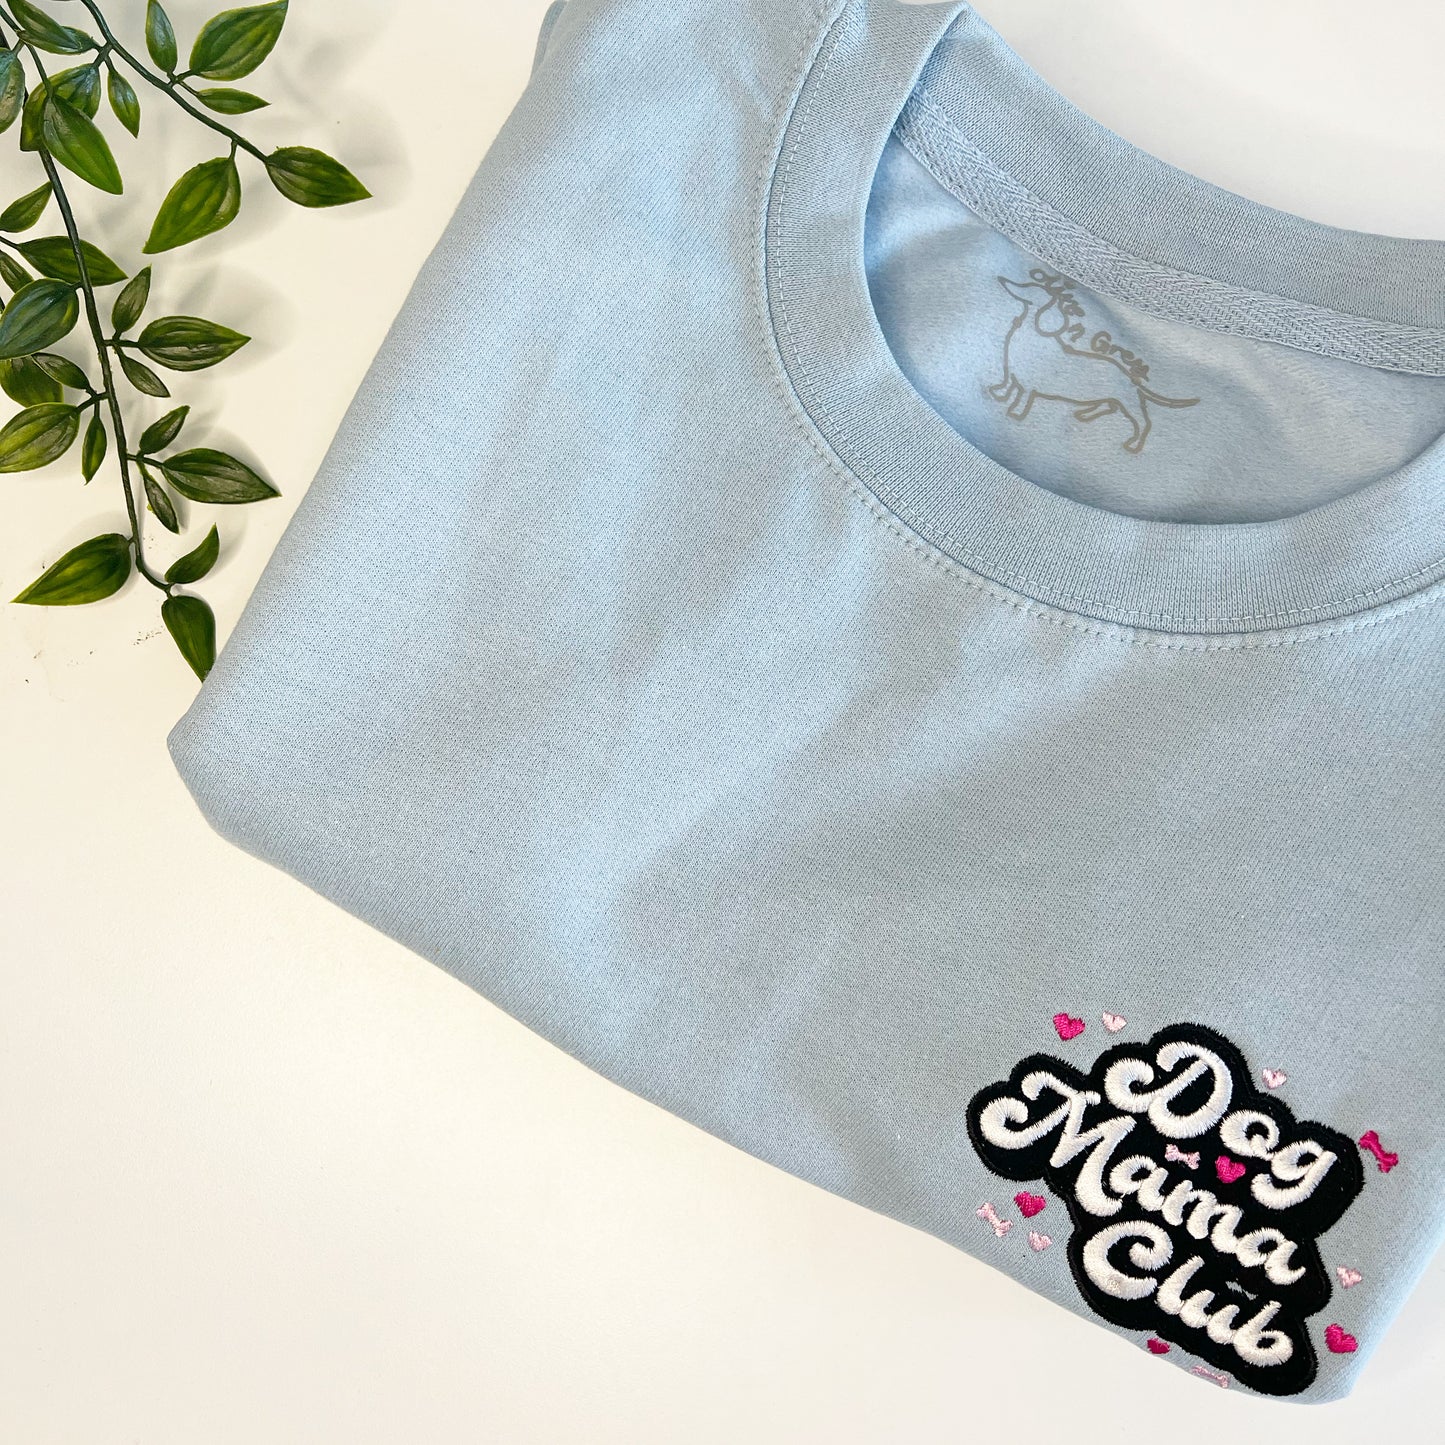 Embroidered Dog Mama Club Sweatshirt